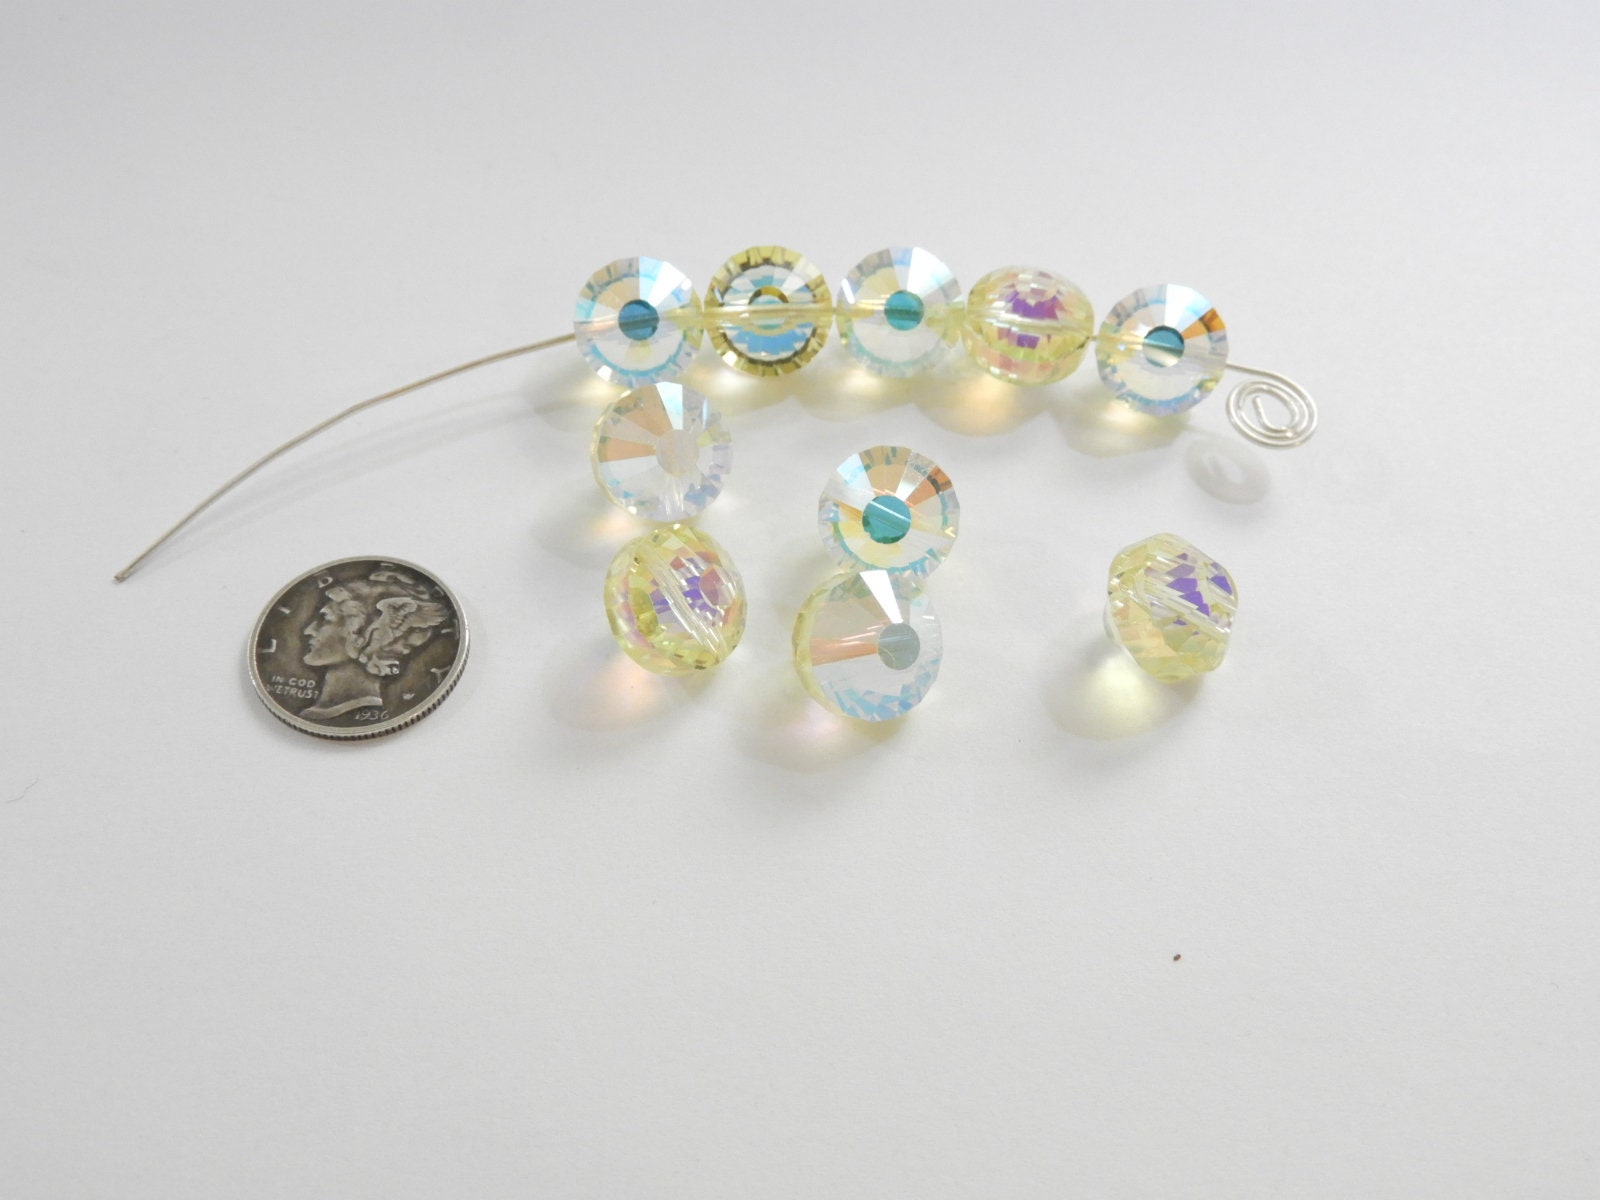 5101 - Swarovski vintage round and biconical crystal beads - Chalkwhite ab  2x mm 12